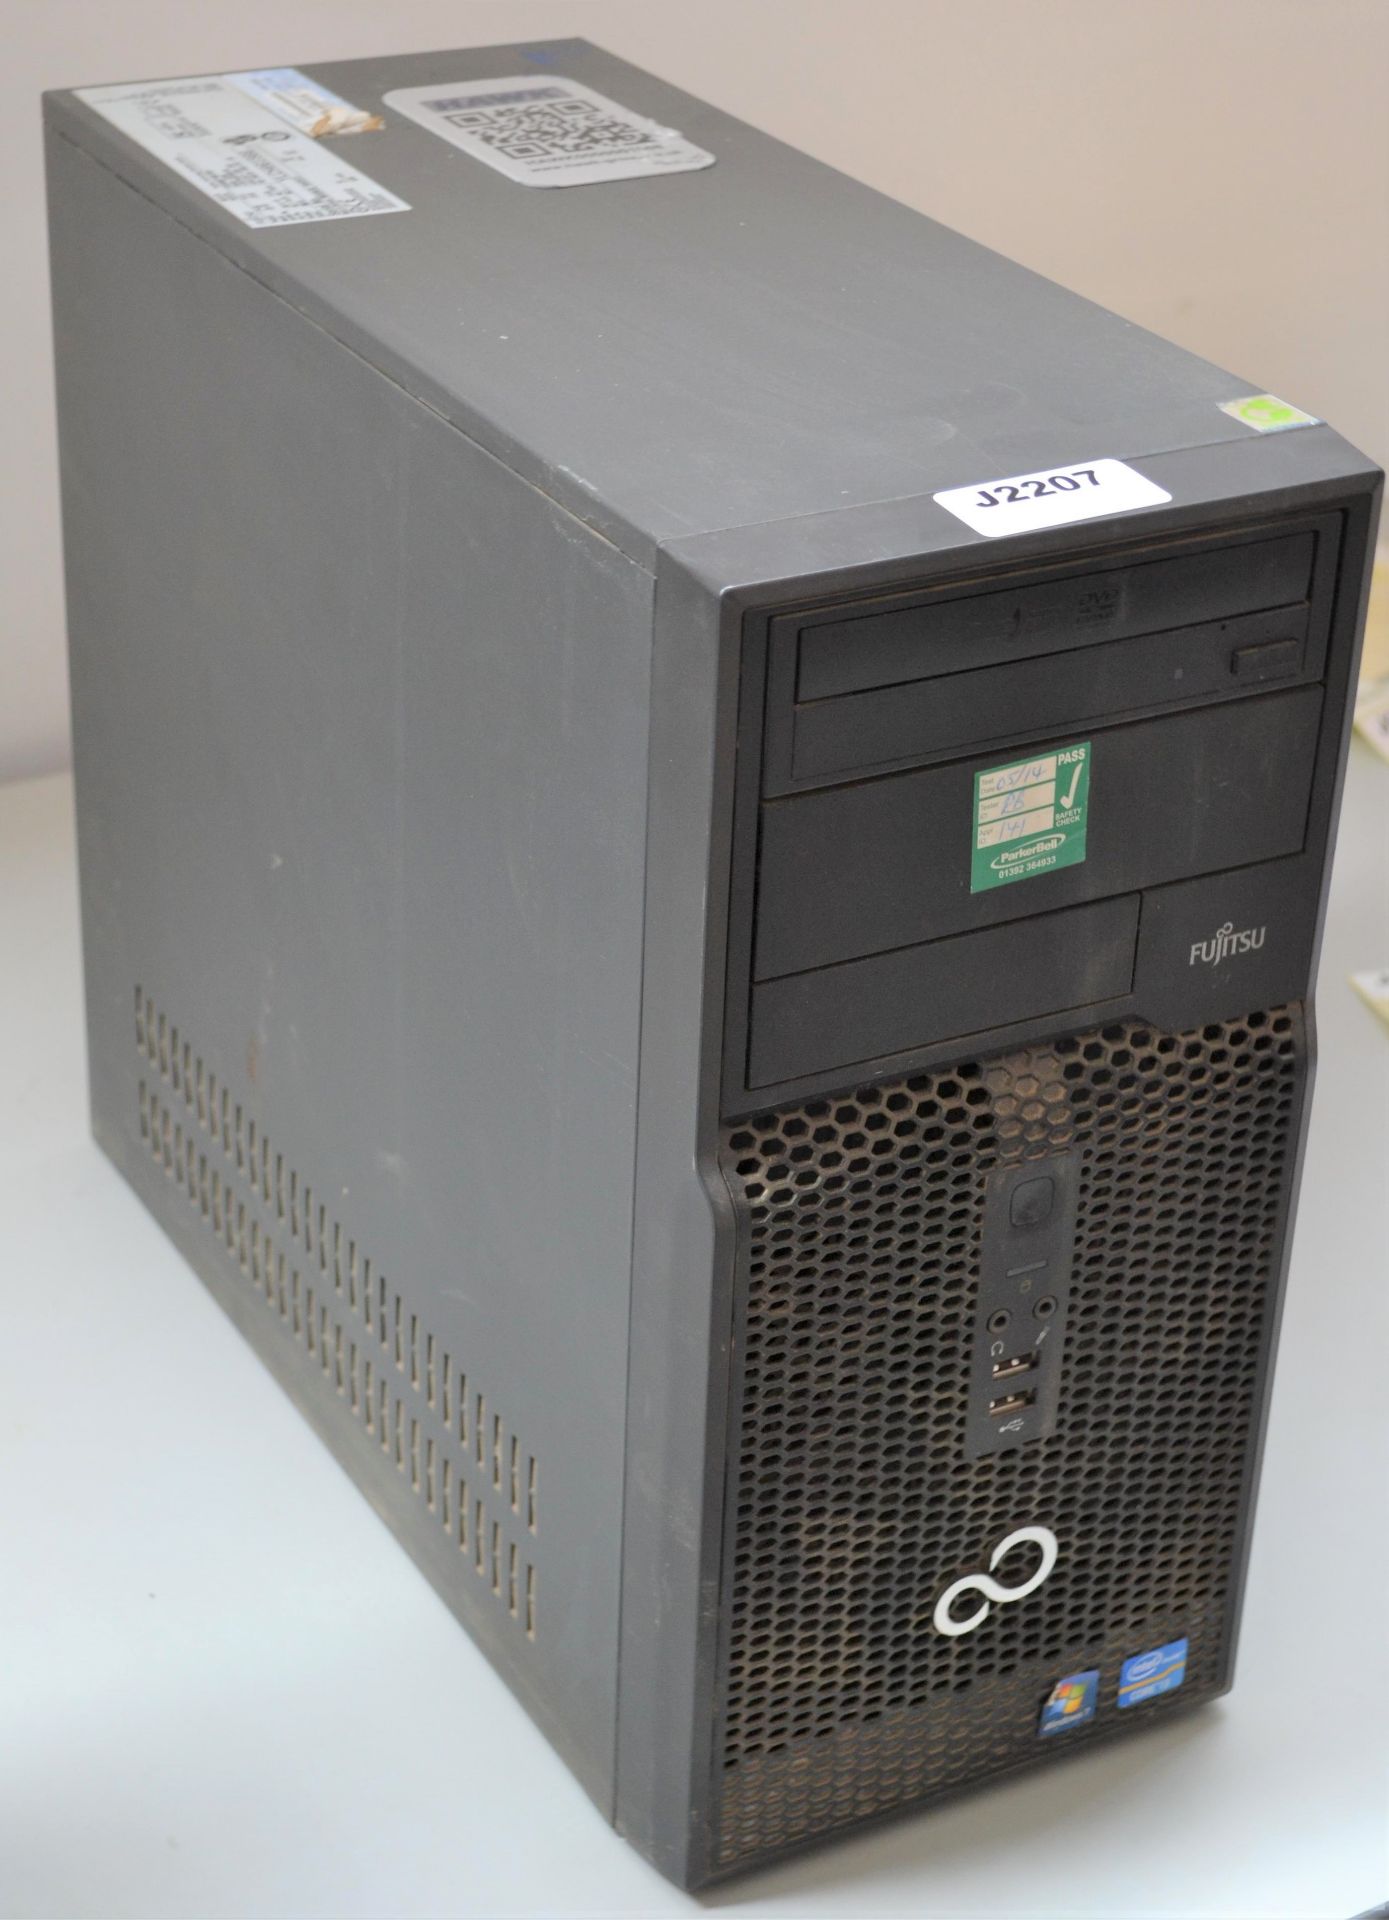 1 x Fujitsu Esprimo P400 Desktop Computer - Features Intel Core i3-2130 3.4ghz Processor and 4gb